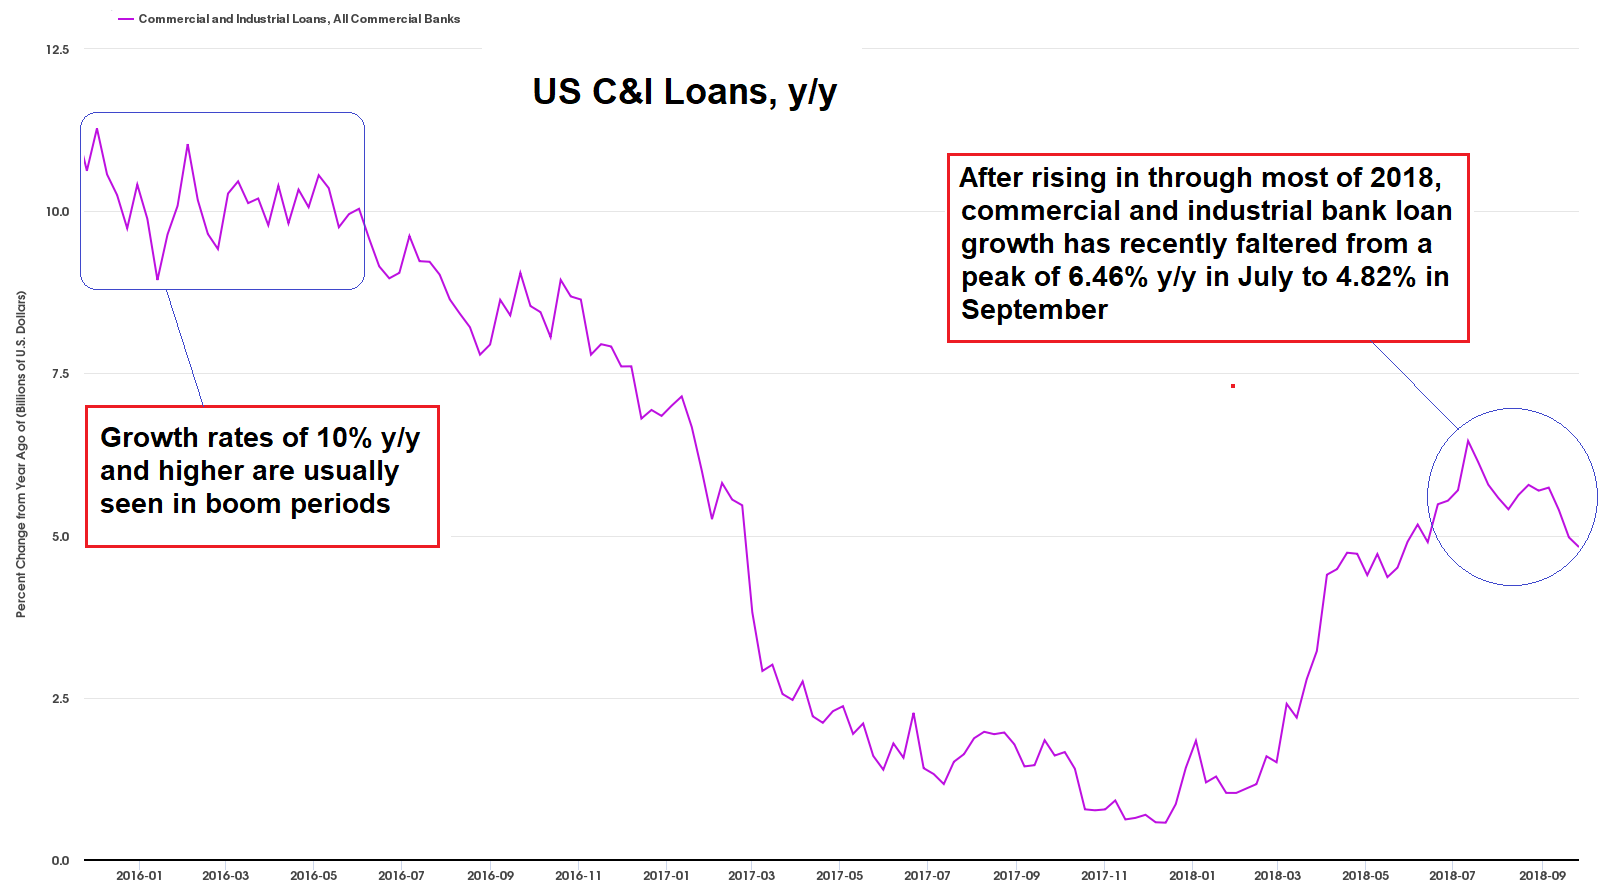 US C&I Loans